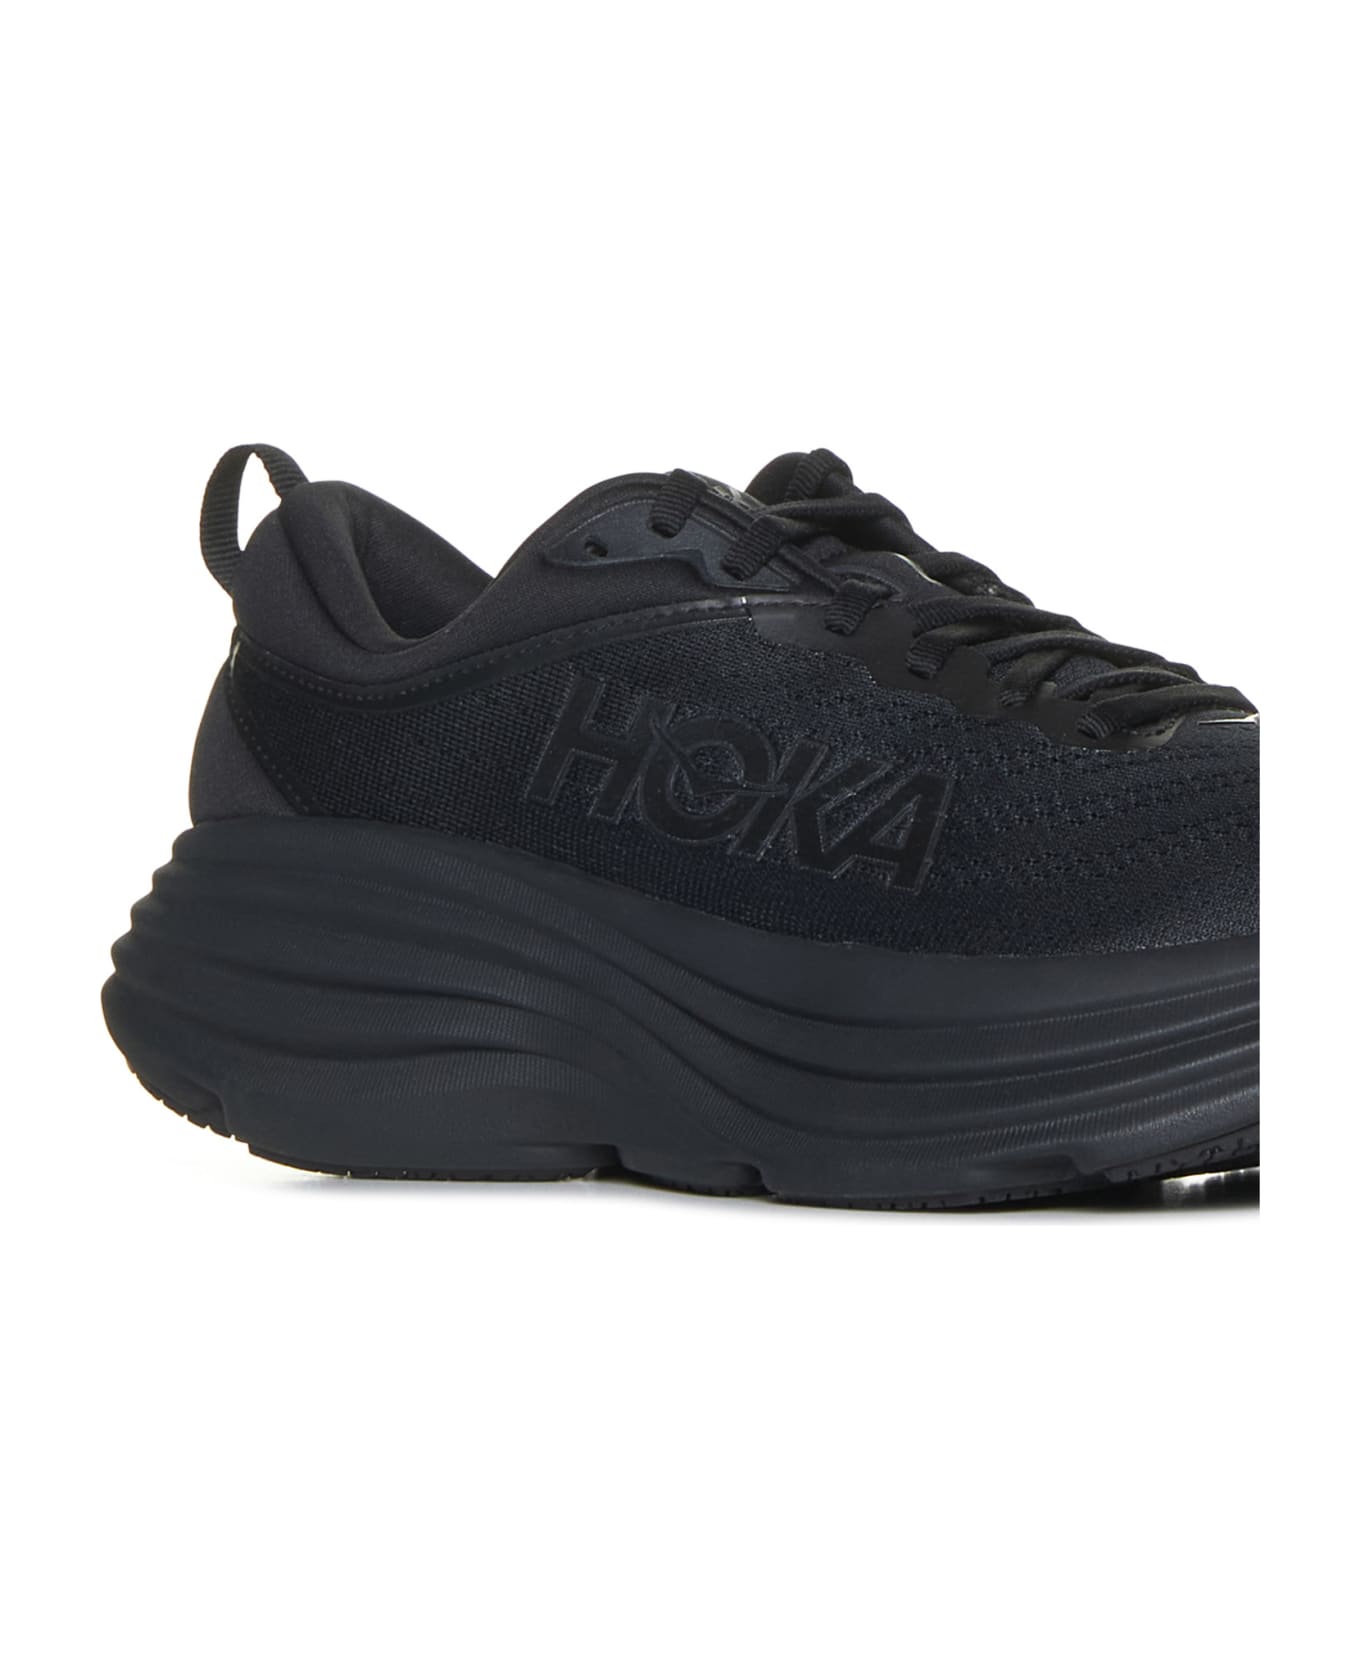 Hoka Sneakers - Black / black スニーカー